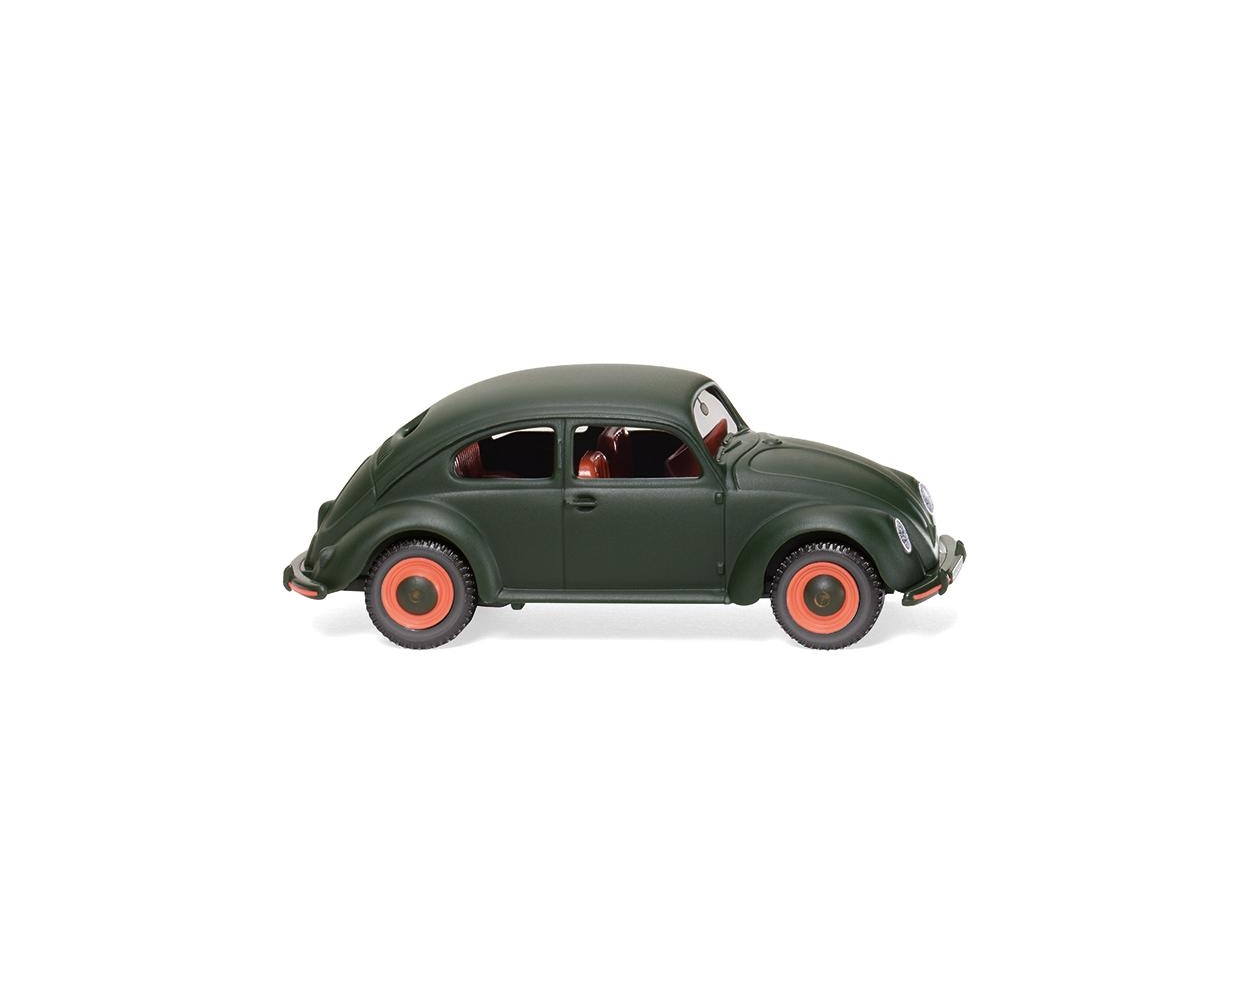 VW Brezelkäfer- dunkelmattgrün